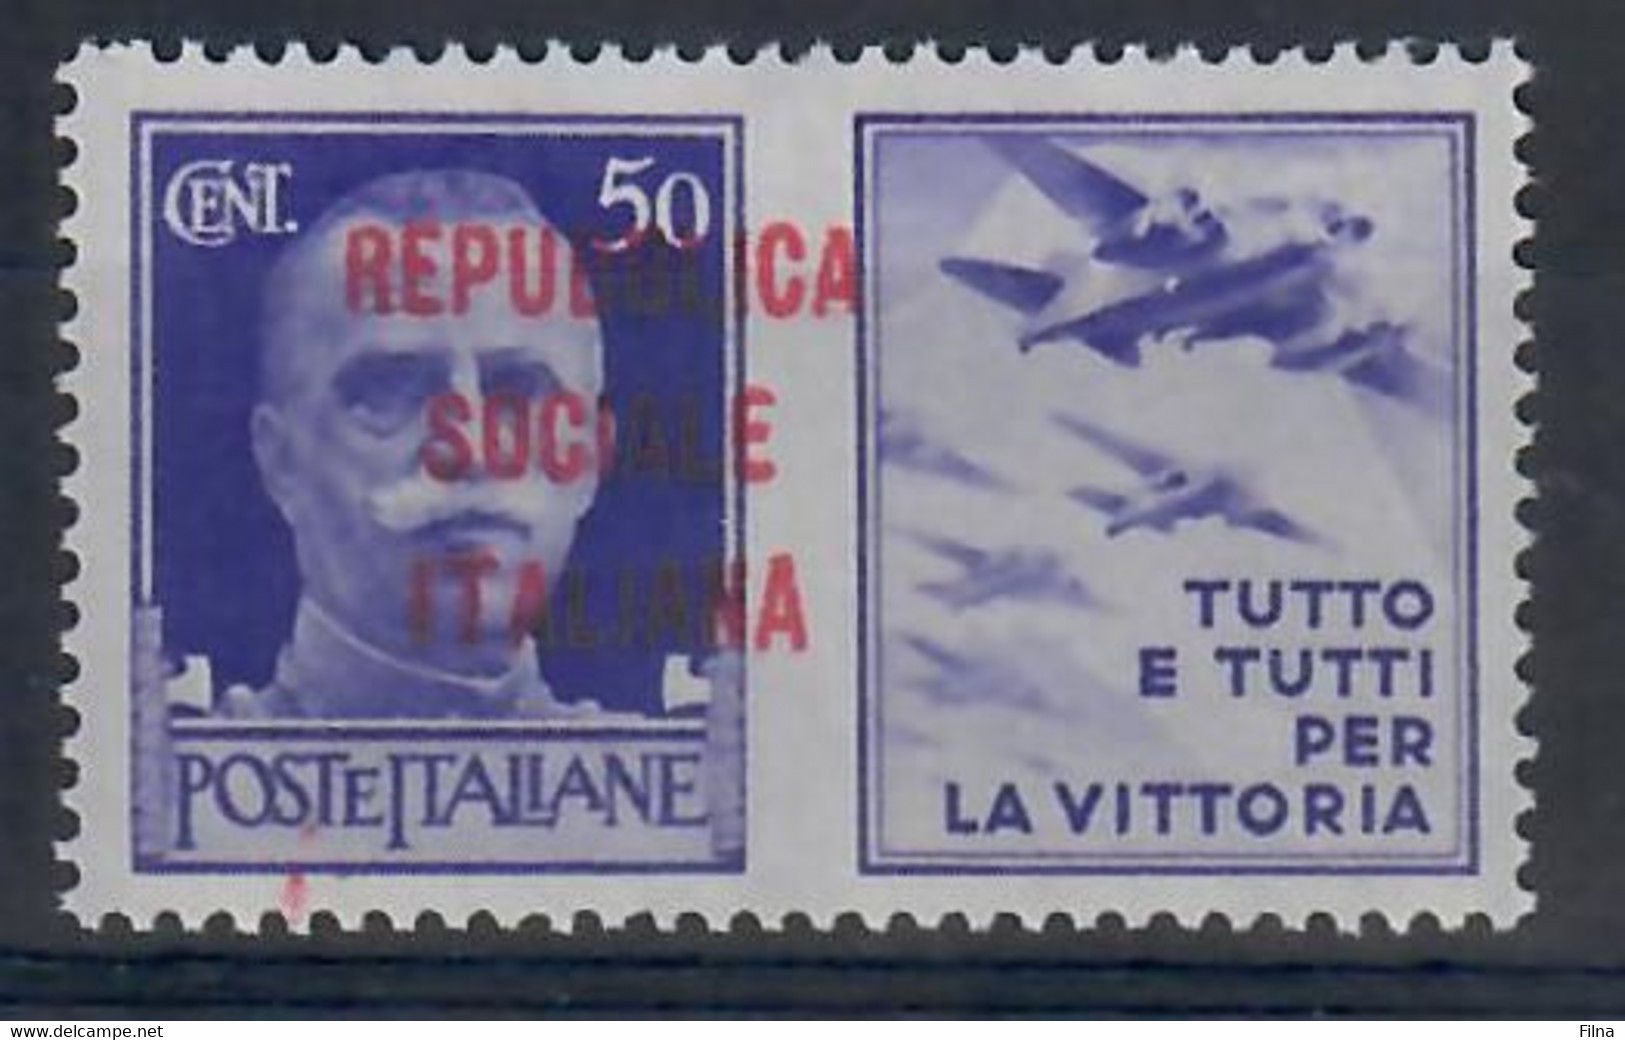 ITALIA - REPUBBLICA SOCIALE ITALIANA 1944 - PROPAGANDA DI GUERRA - 50 C. - VARIETA' SOPRASTAMPA SPOSTATA A DX  - MNH/** - War Propaganda